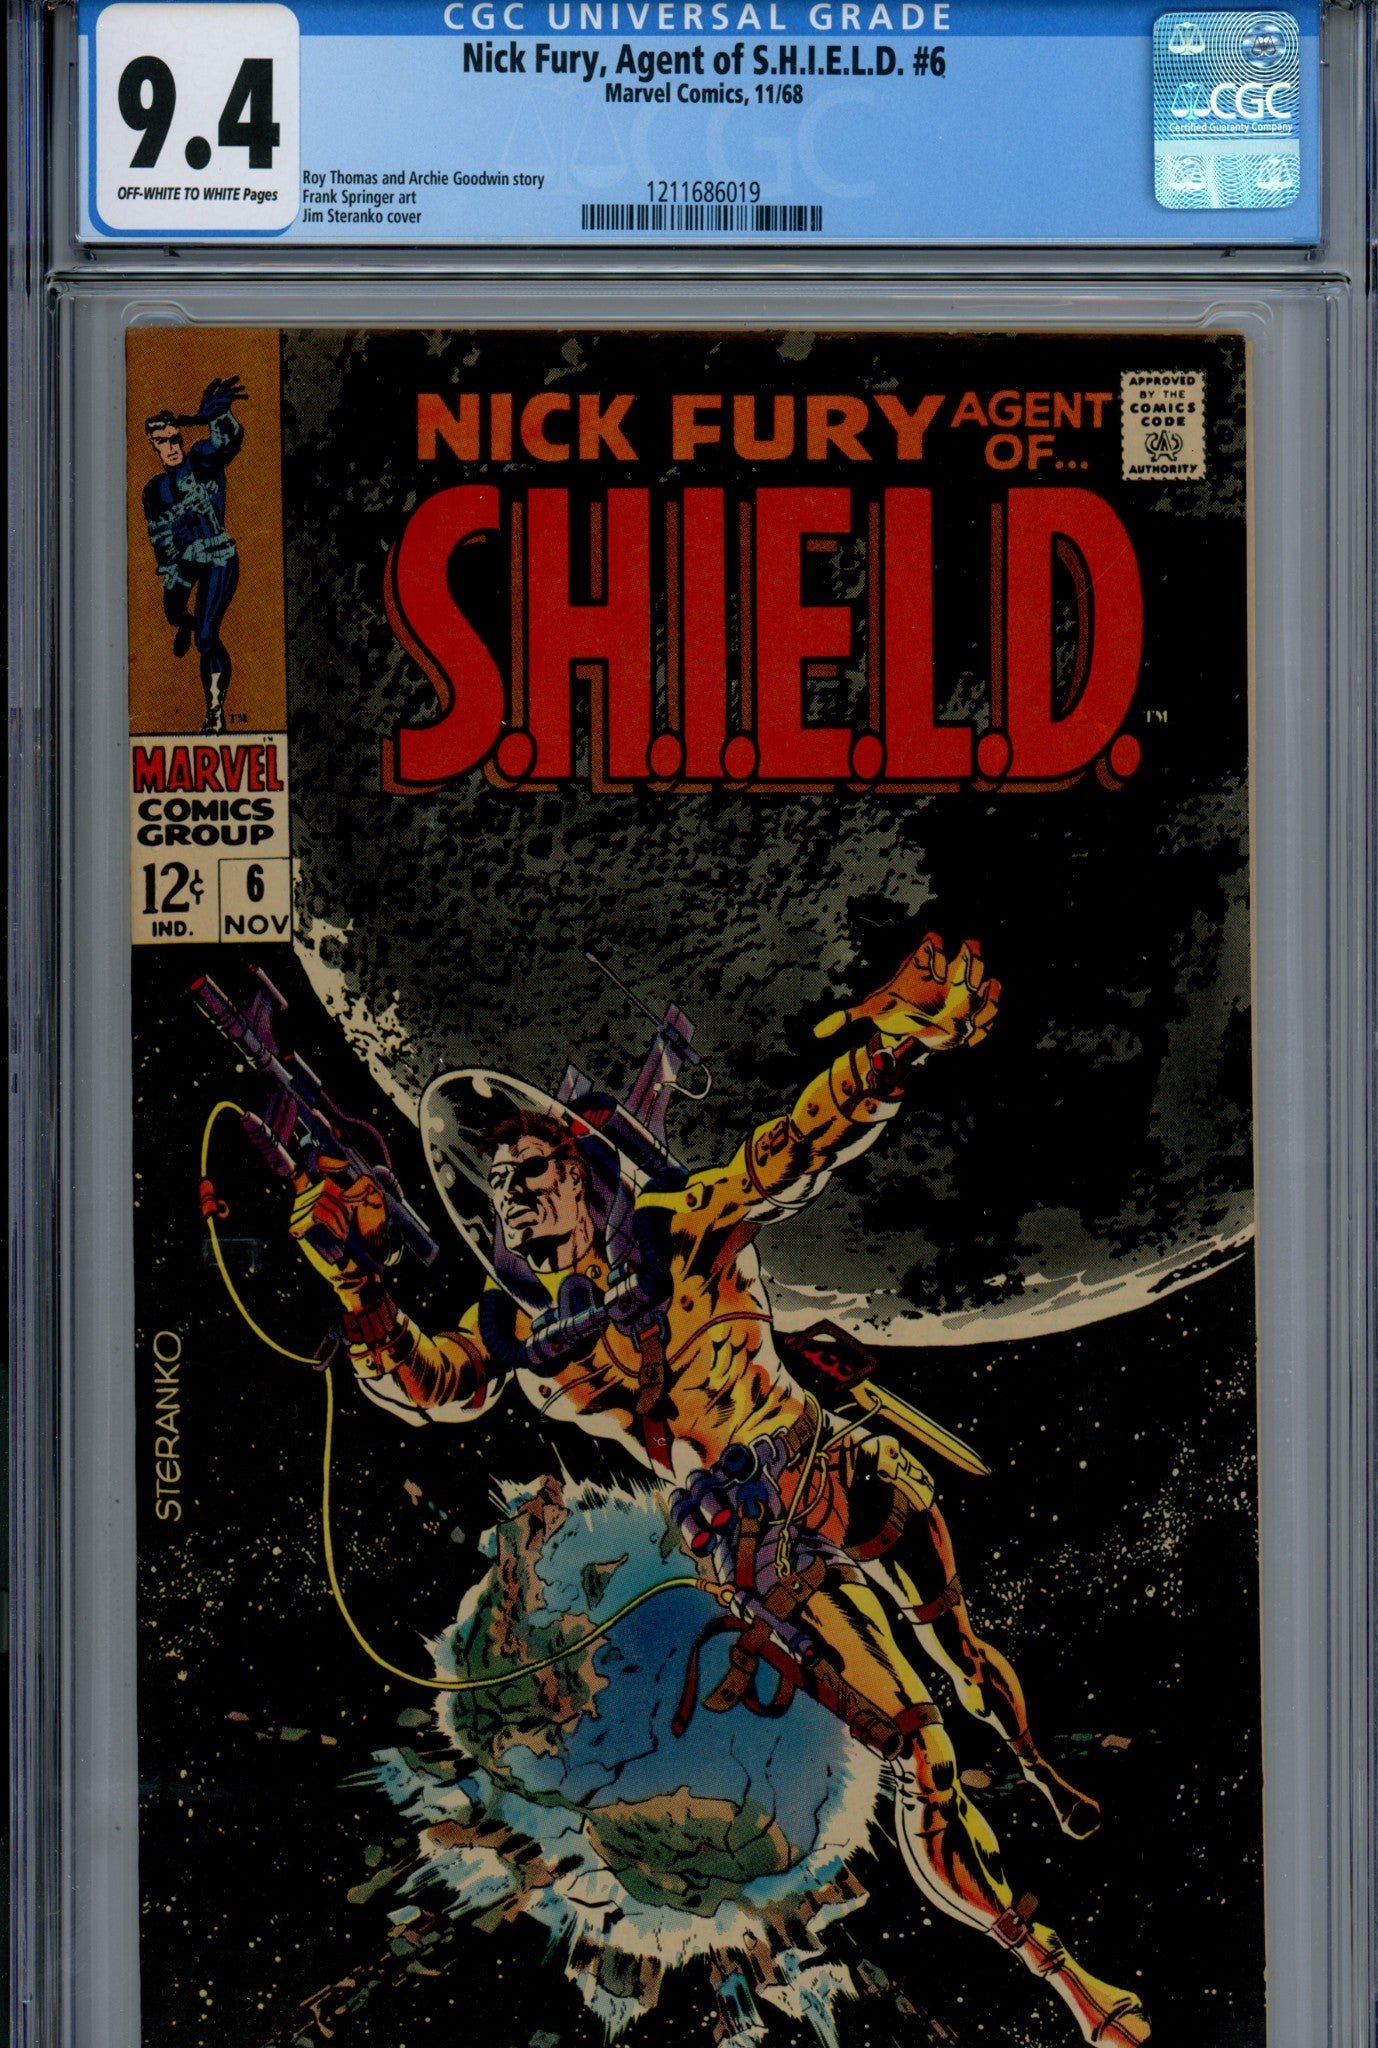 Nick Fury, Agent of SHIELD Vol 1 6 CGC 9.4 (NM) (1968) 